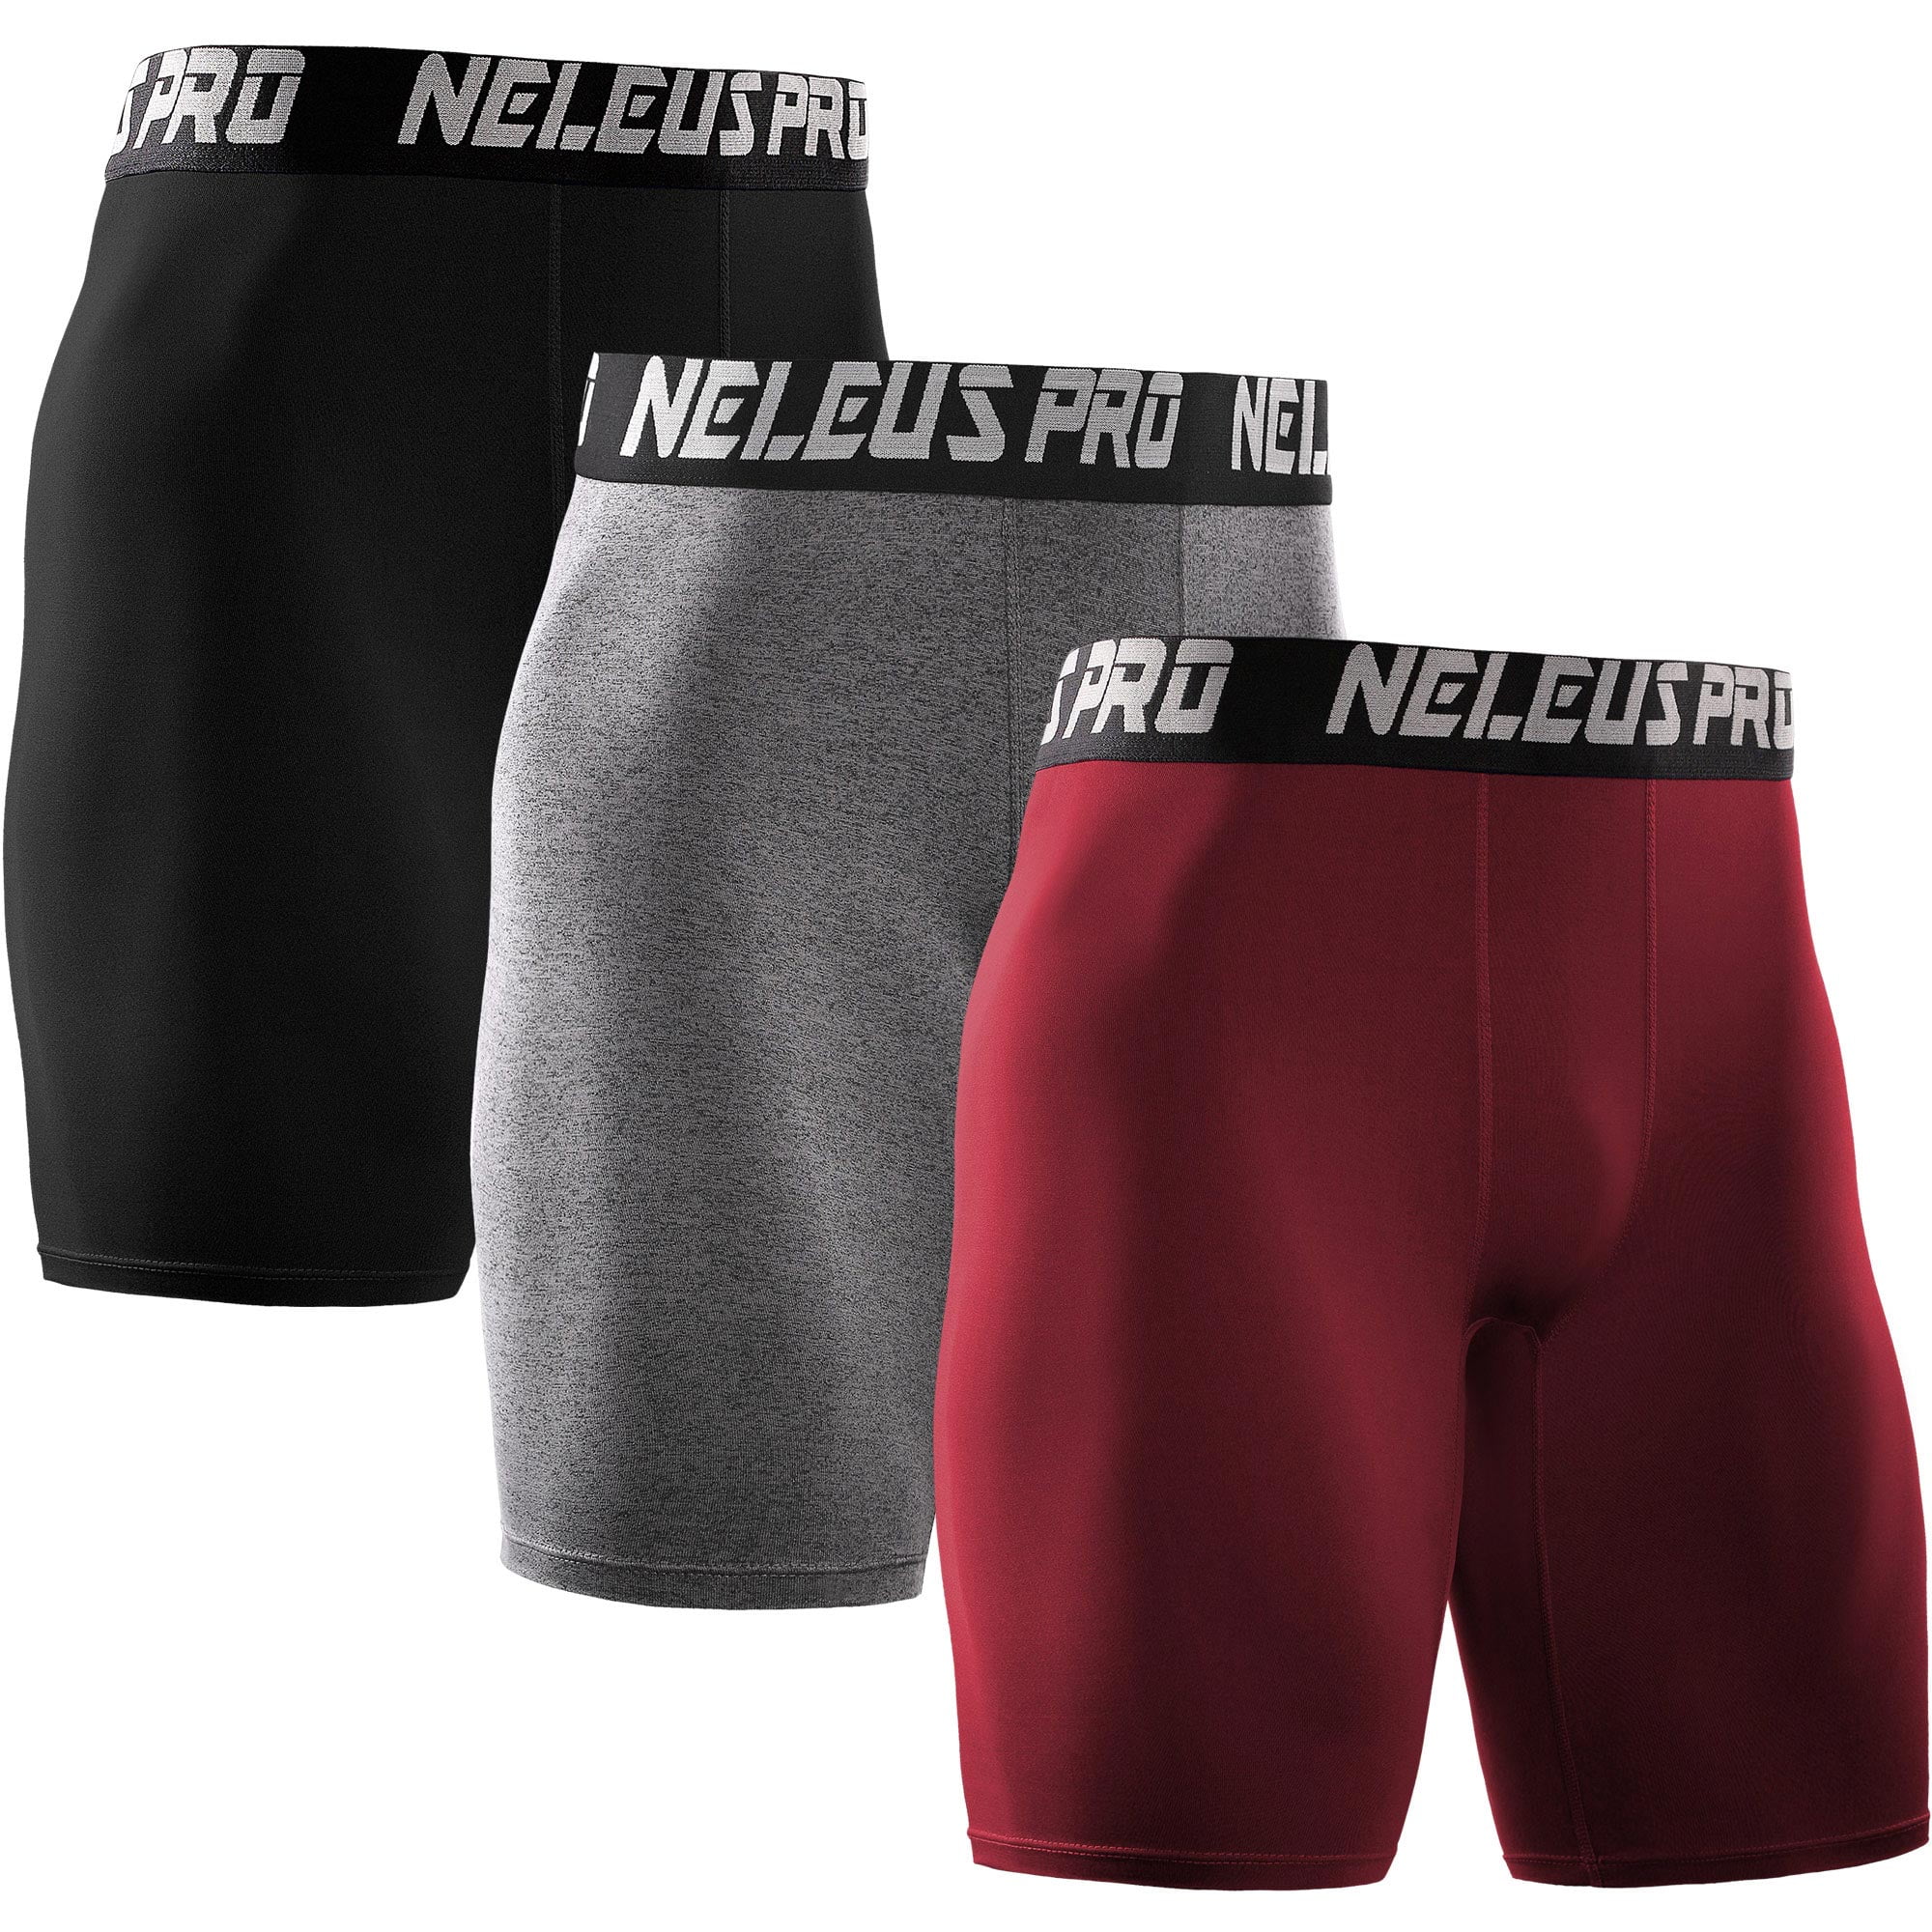 NELEUS Men's Performance Compression Shorts Athletic Workout Underwear 3  Pack,Black,US Size S 